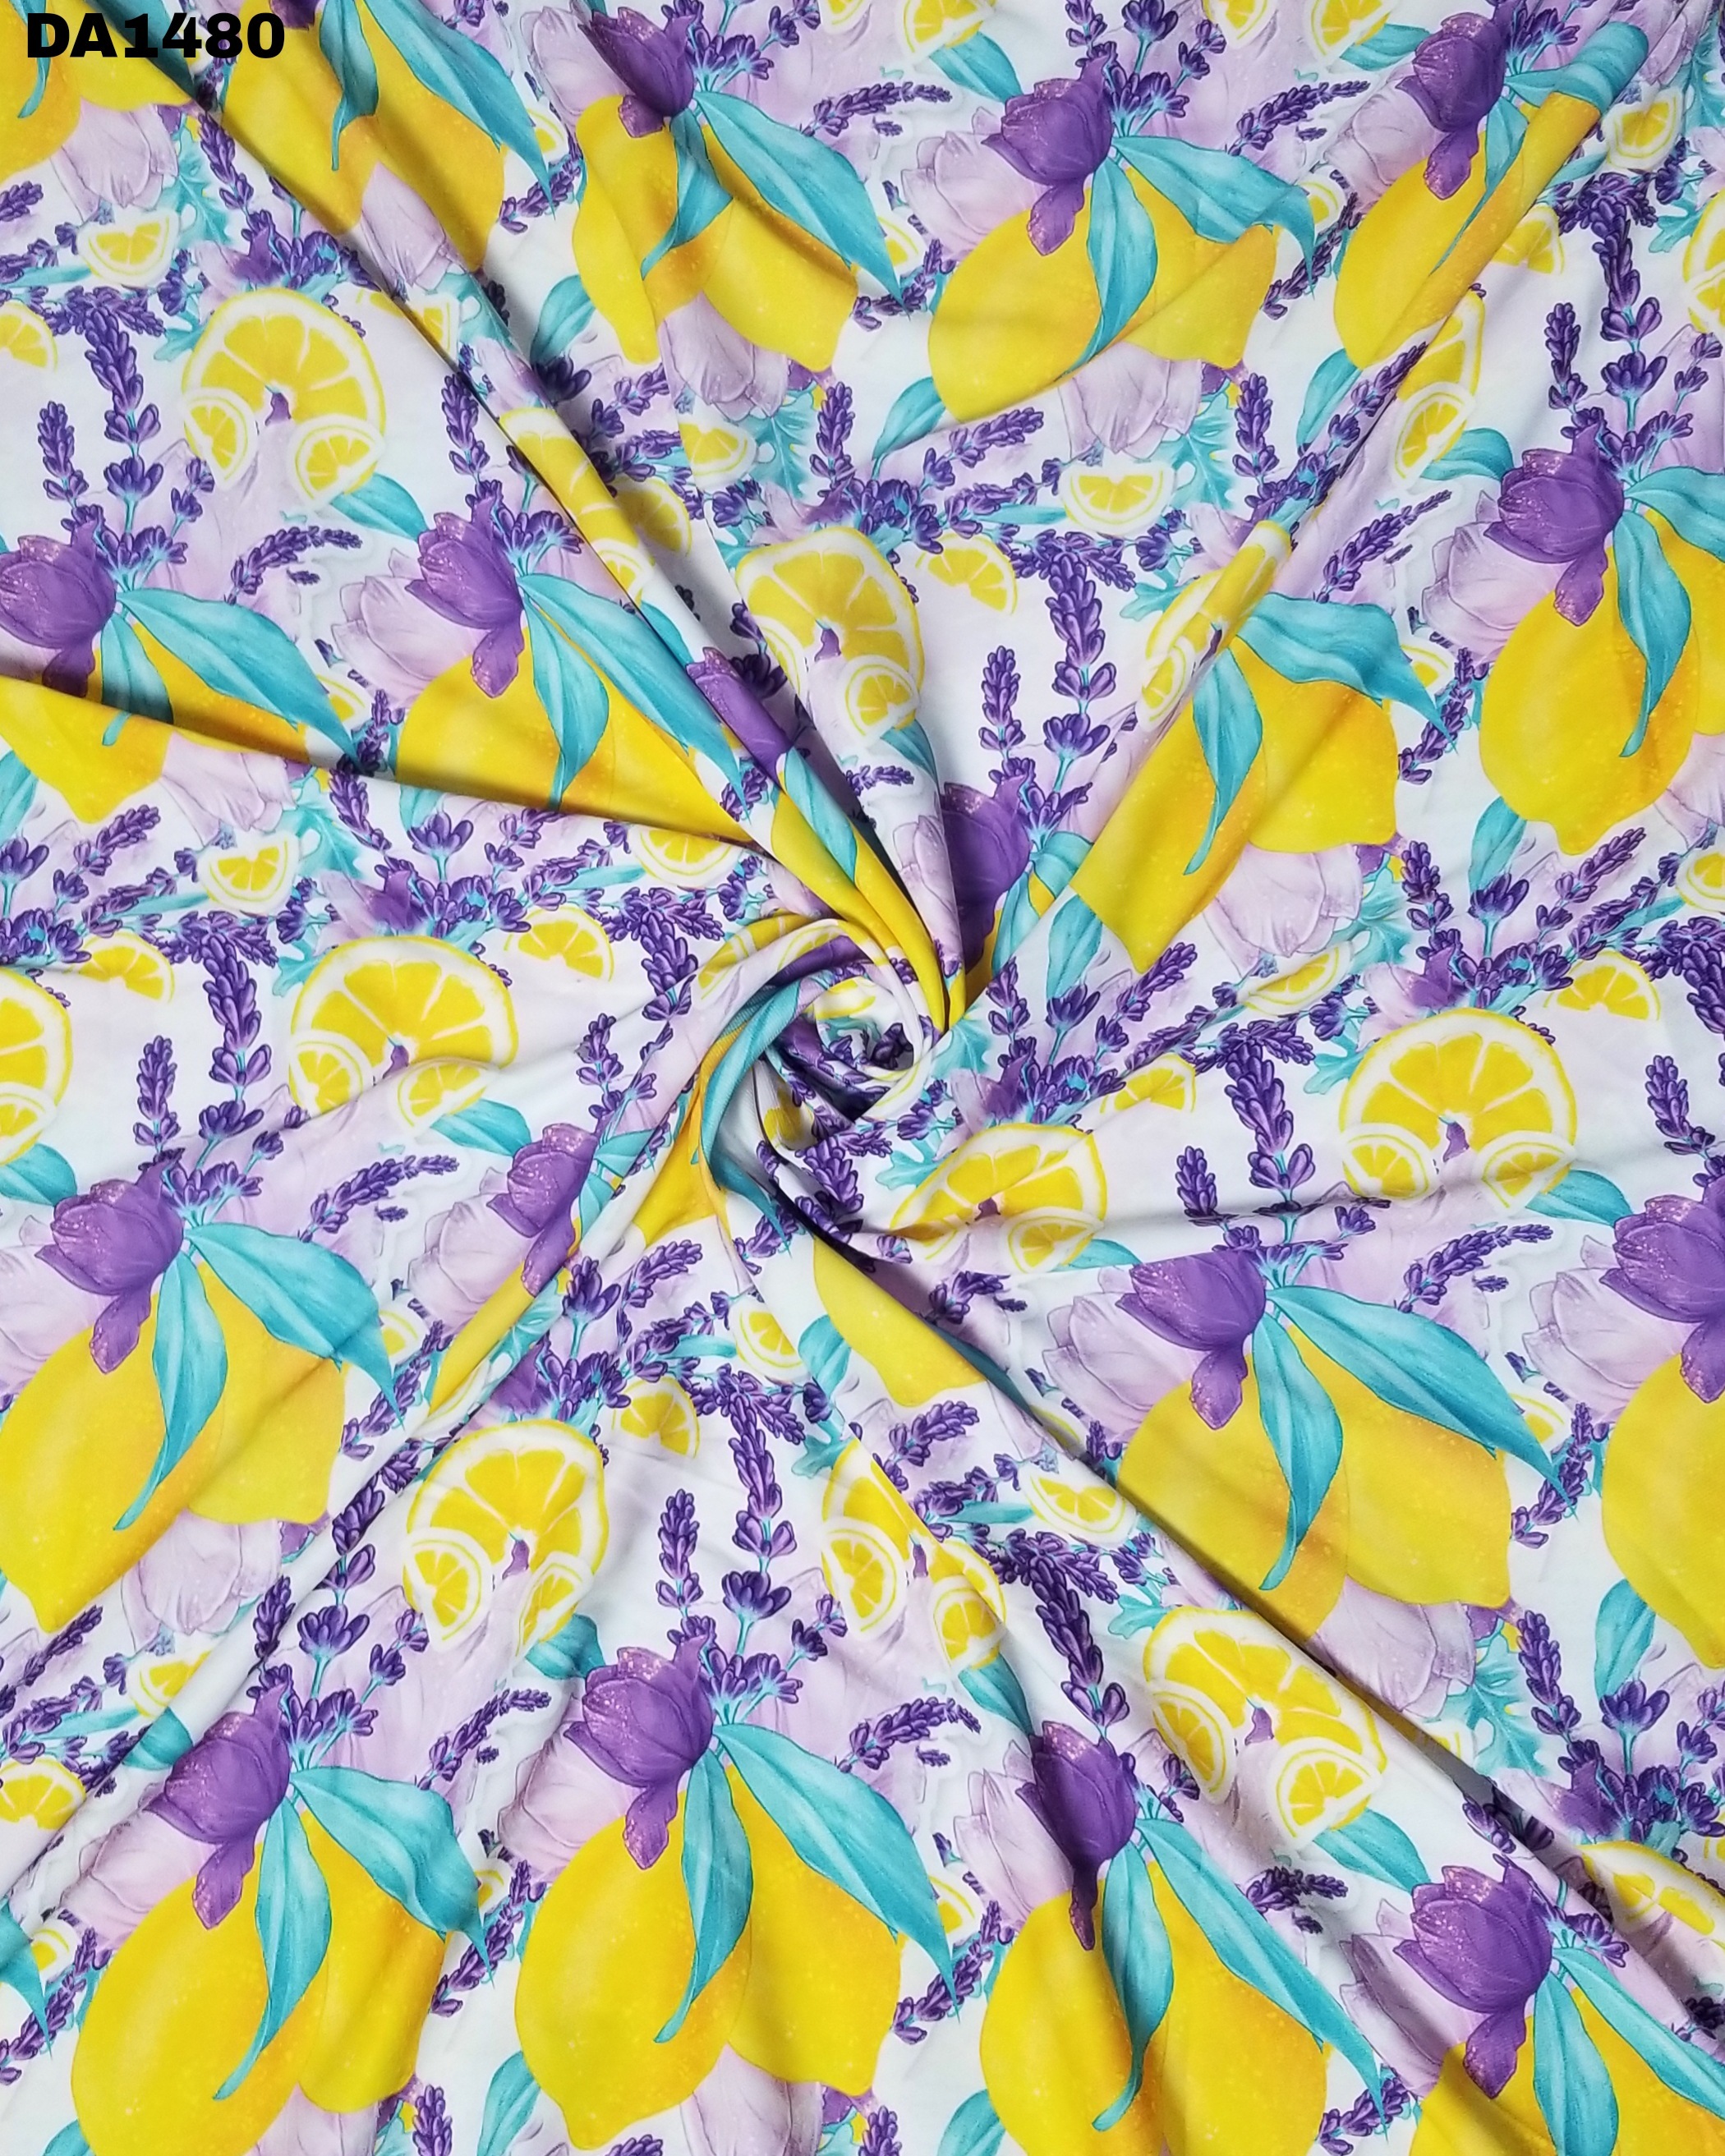 Colorful Digital Prints on Twill Silk Fabric